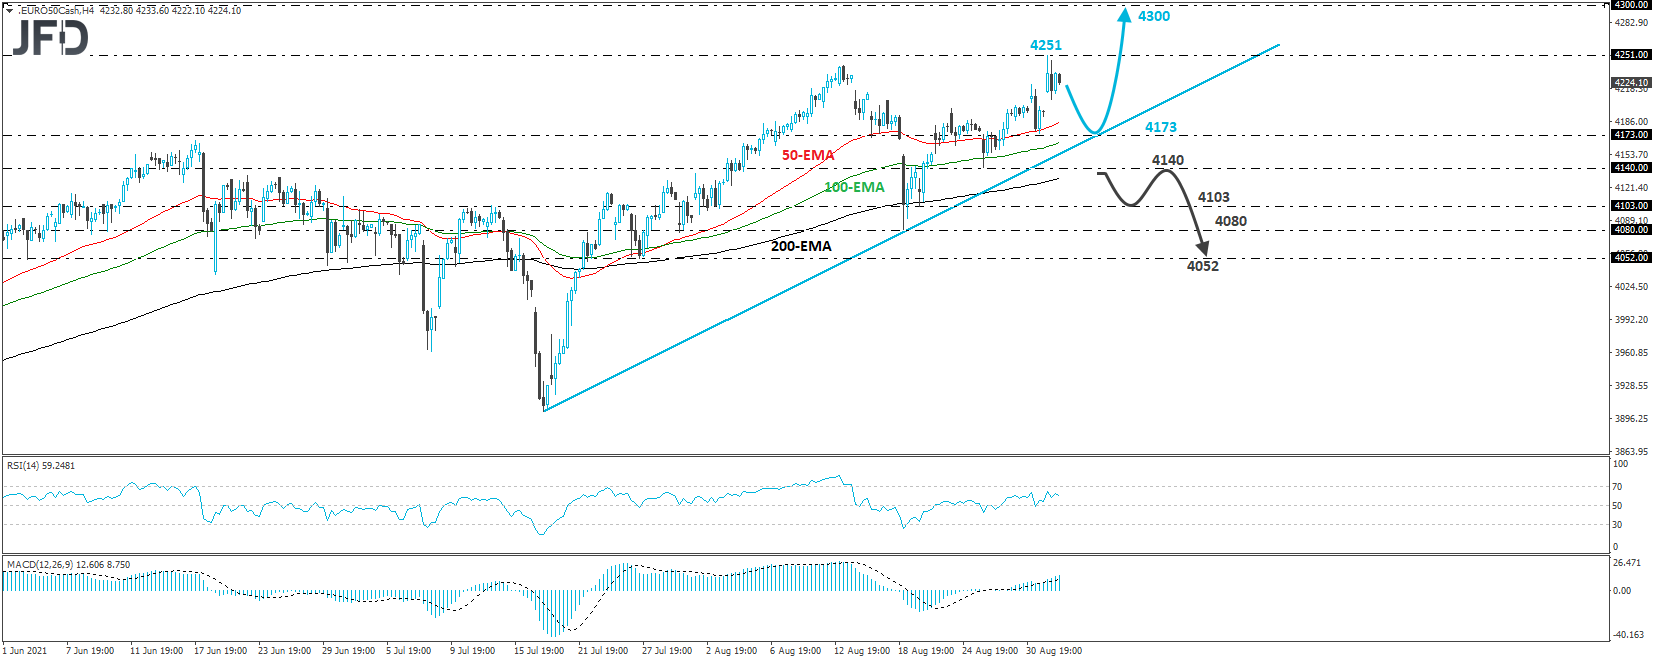 Euro Stoxx 50 cash index 4-hour chart technical analysis 